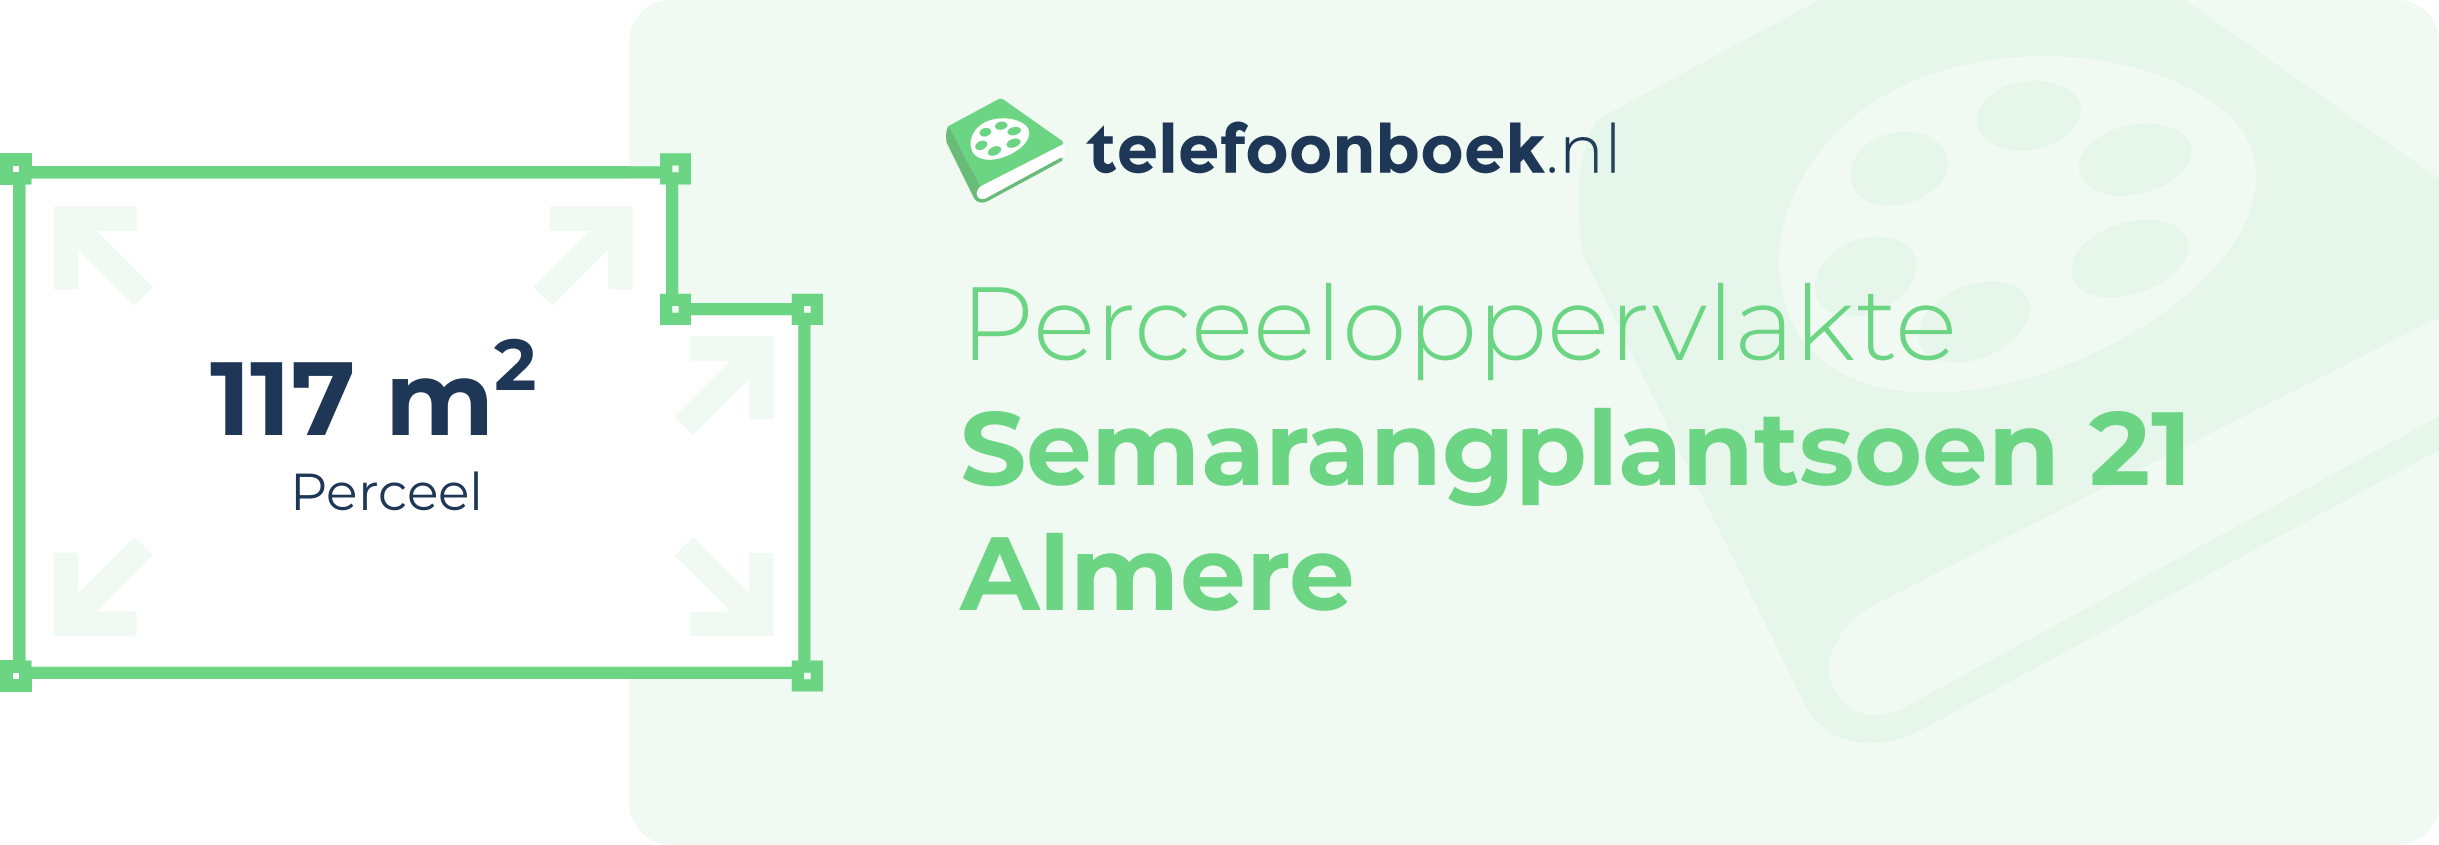 Perceeloppervlakte Semarangplantsoen 21 Almere